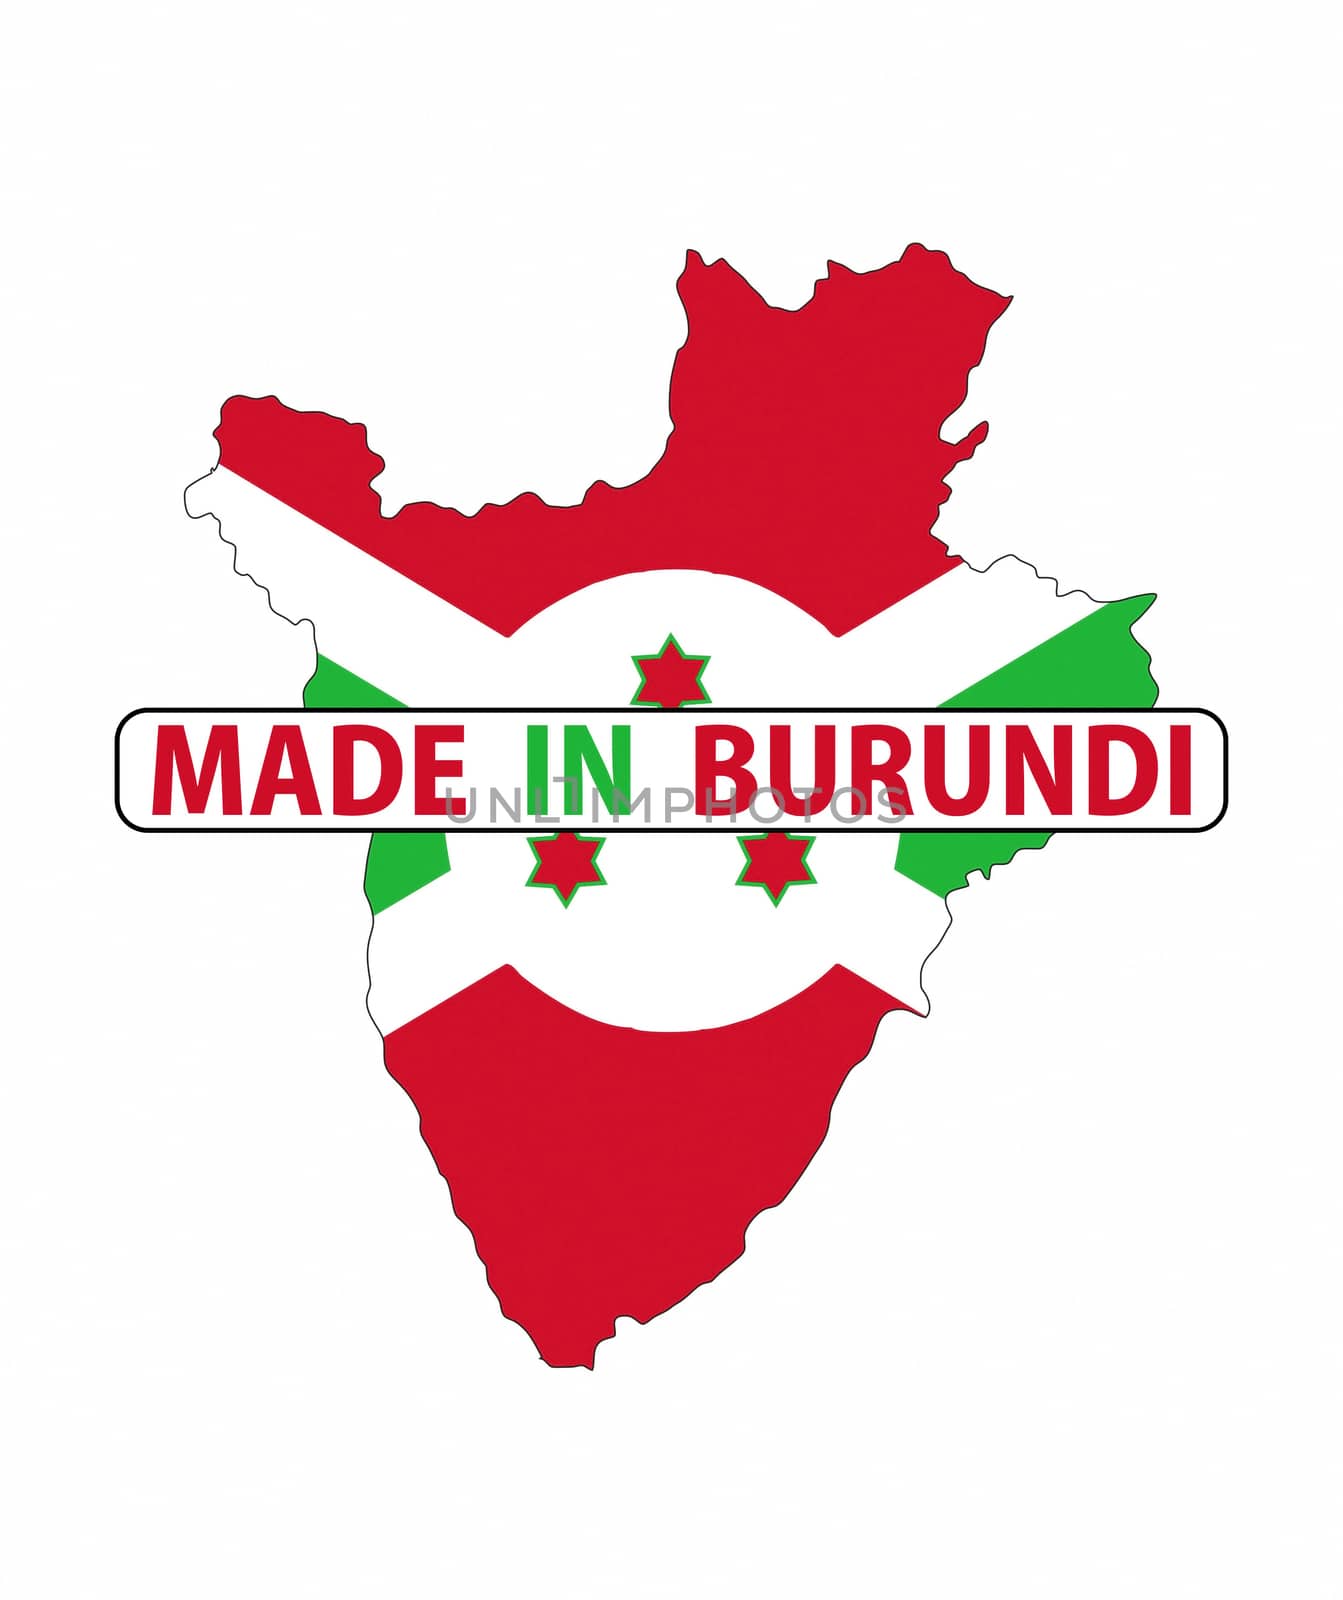 made in burundi by tony4urban